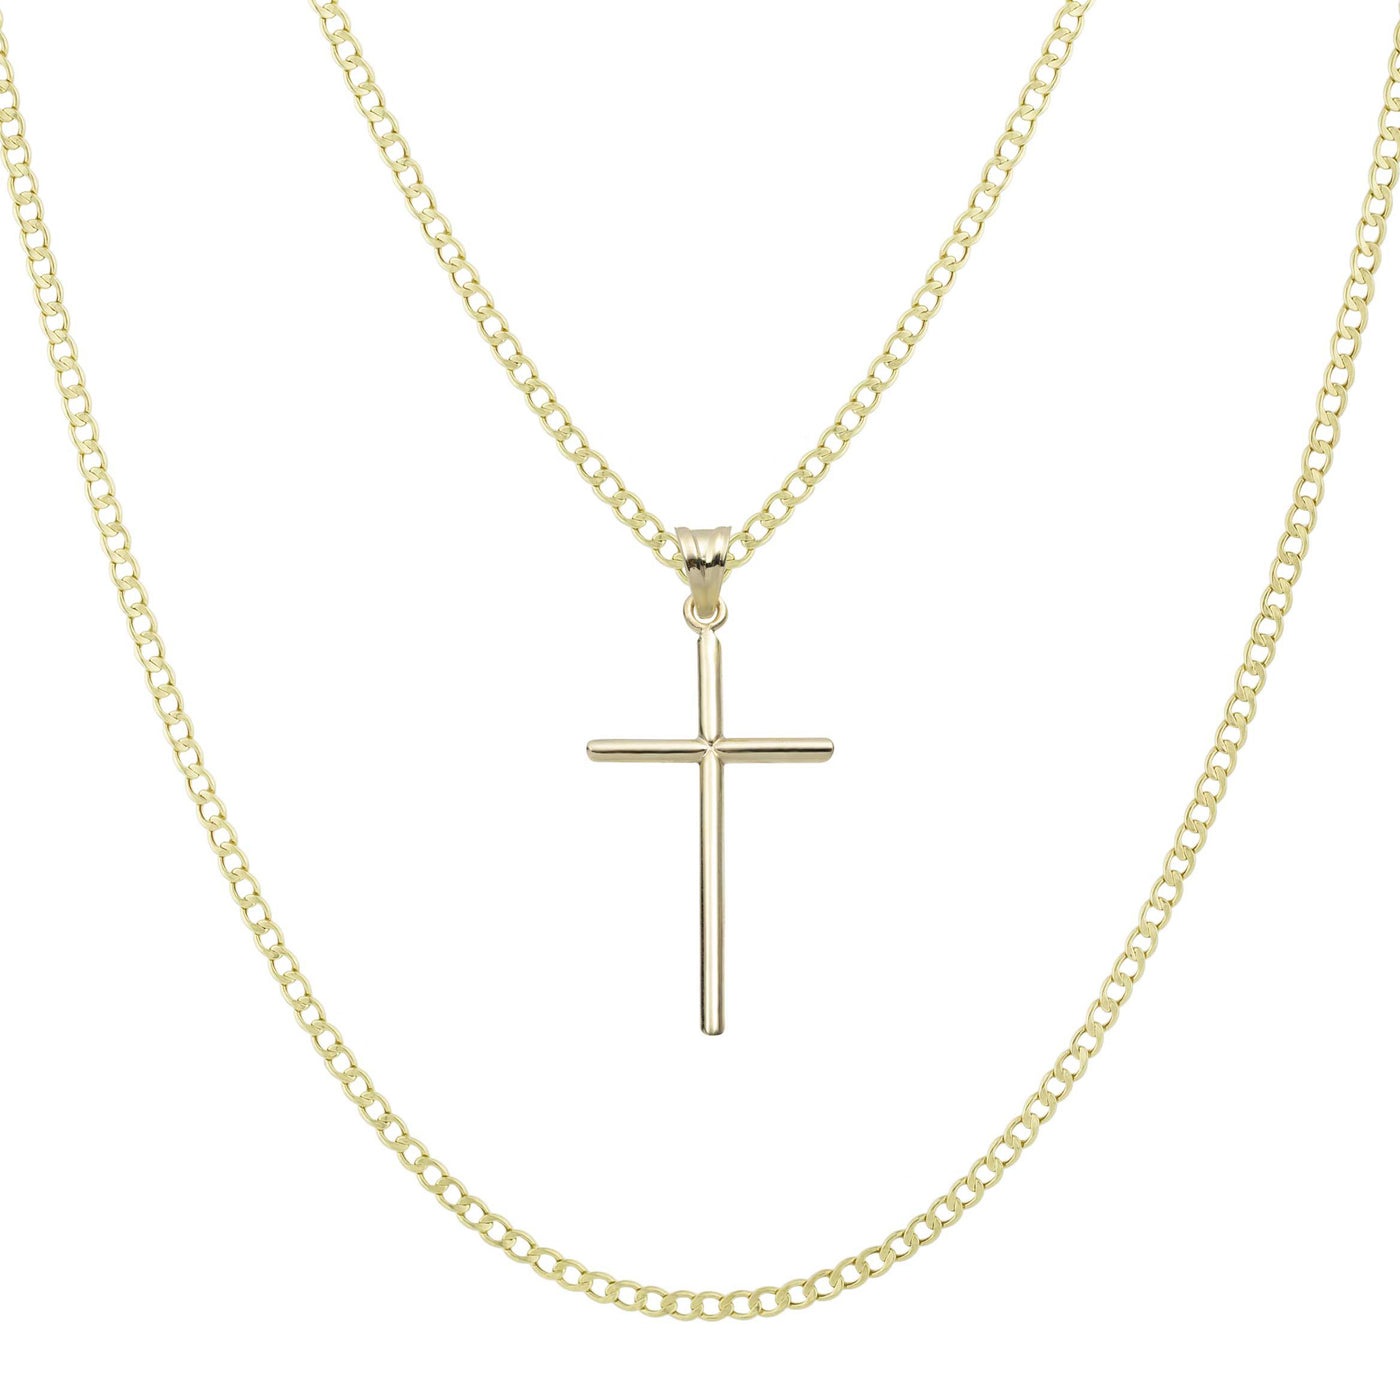 1 3/4" Diamond-Cut Thin Cross Pendant & Chain Necklace Set 10K Yellow White Gold